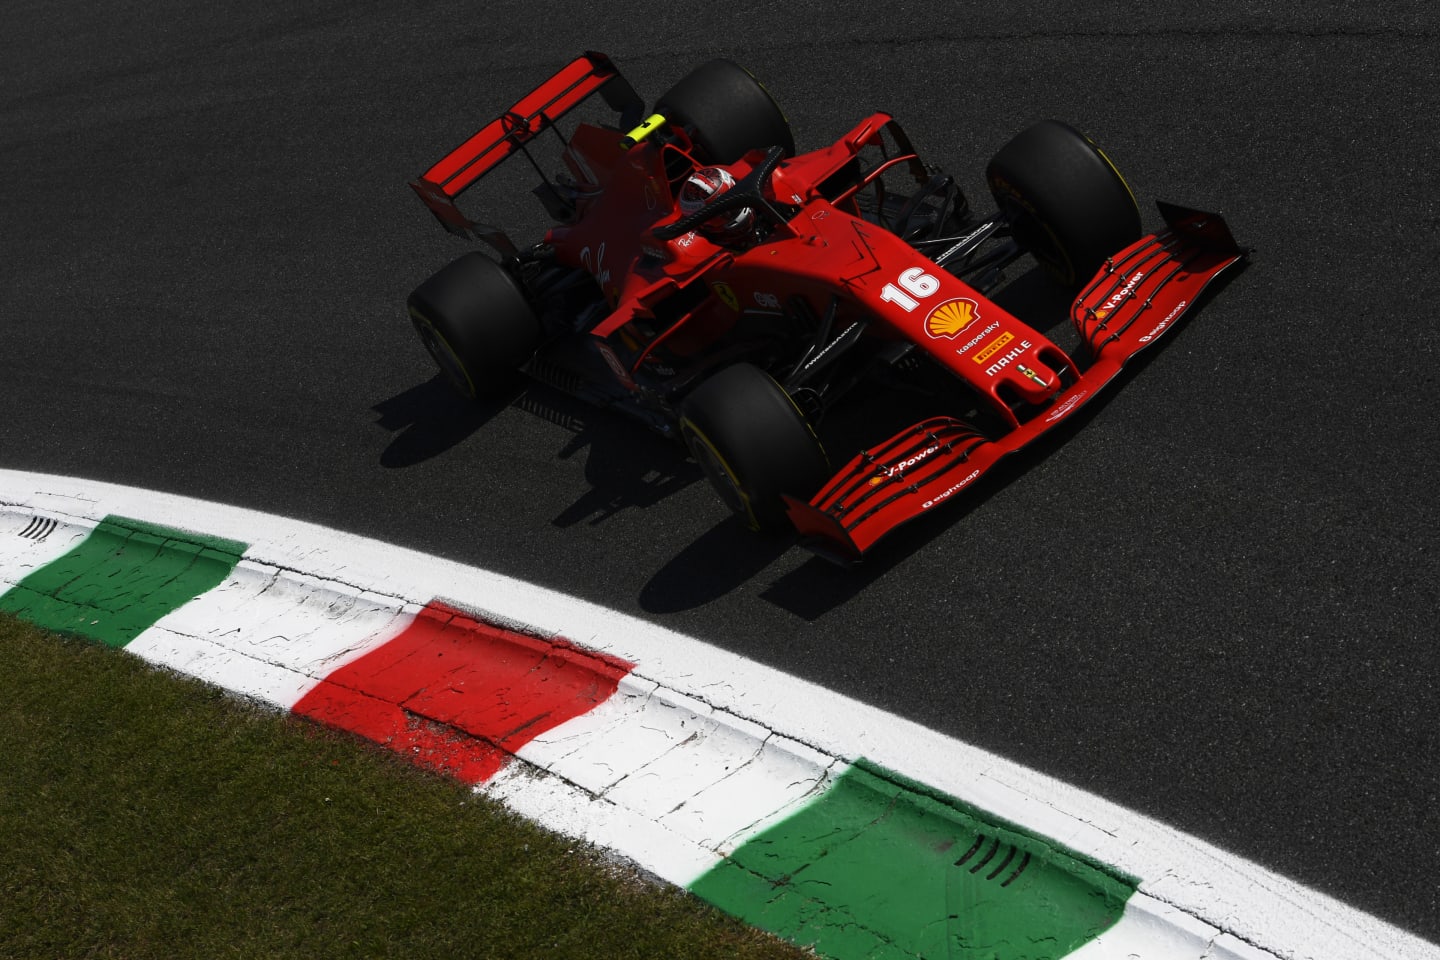 MONZA, ITALY - SEPTEMBER 04: Charles Leclerc of Monaco driving the (16) Scuderia Ferrari SF1000 on